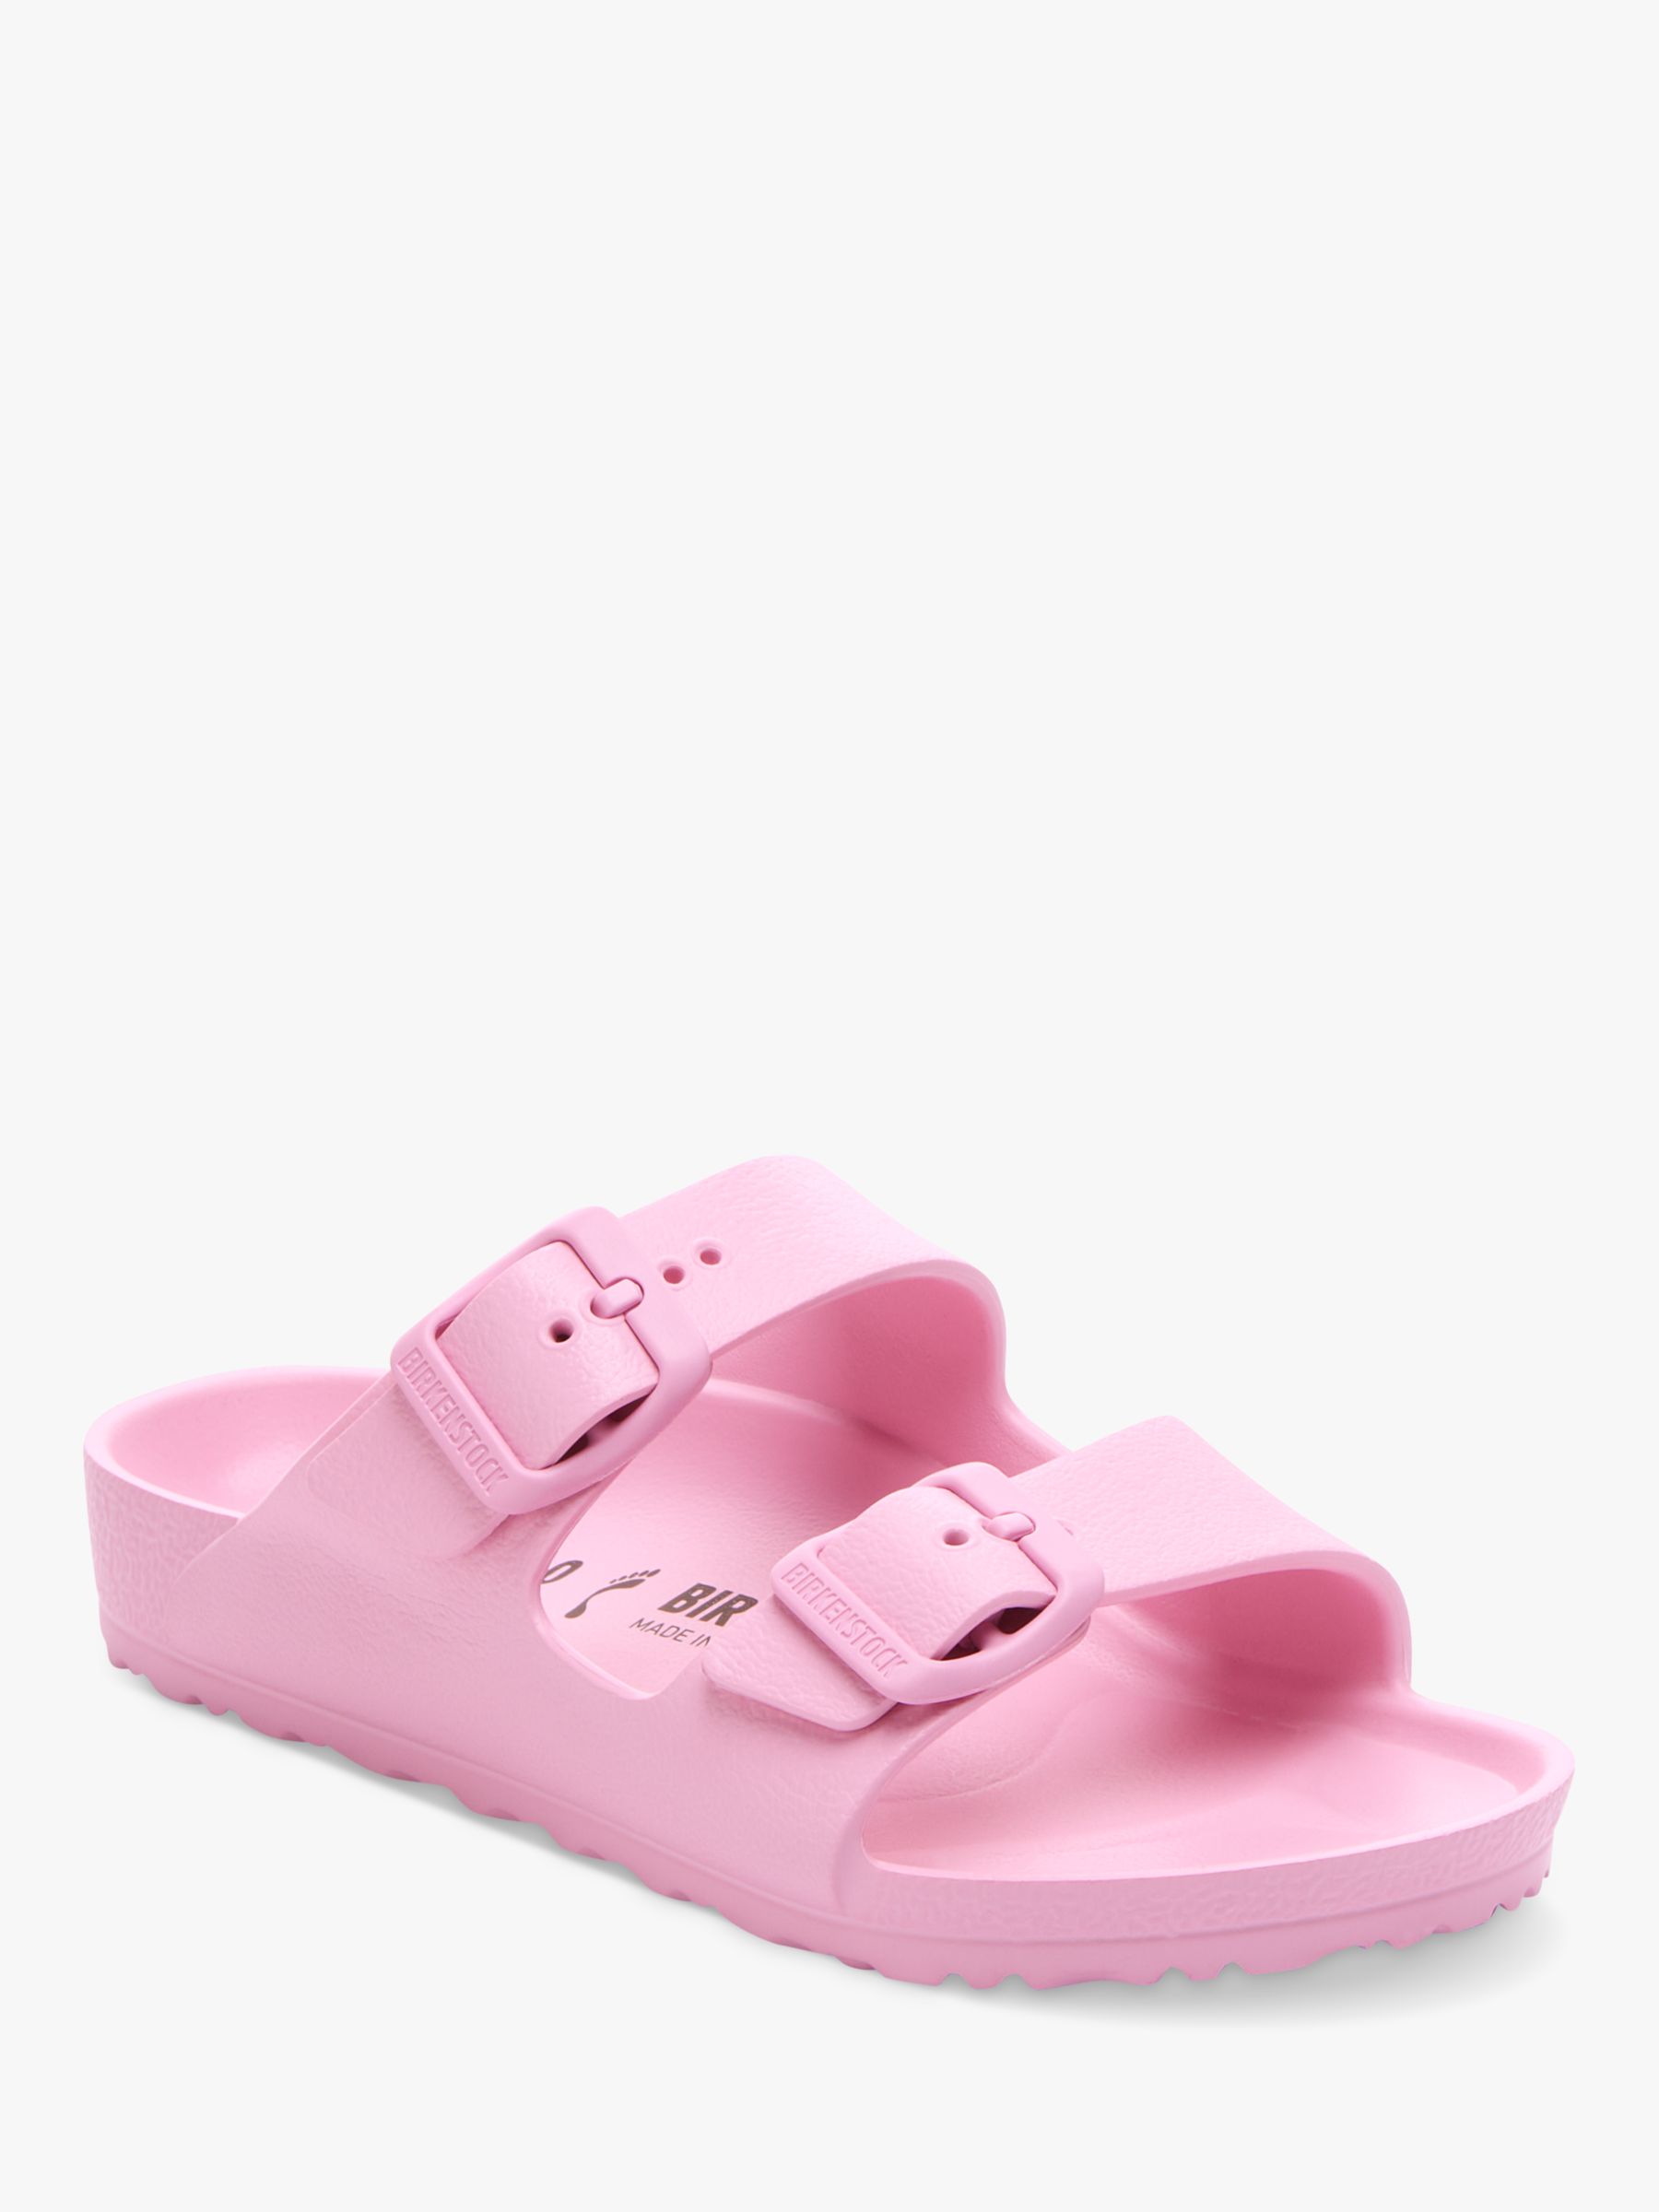 Birkenstock Kids' Rio Double Strap Sandals, Pink Clay, 26